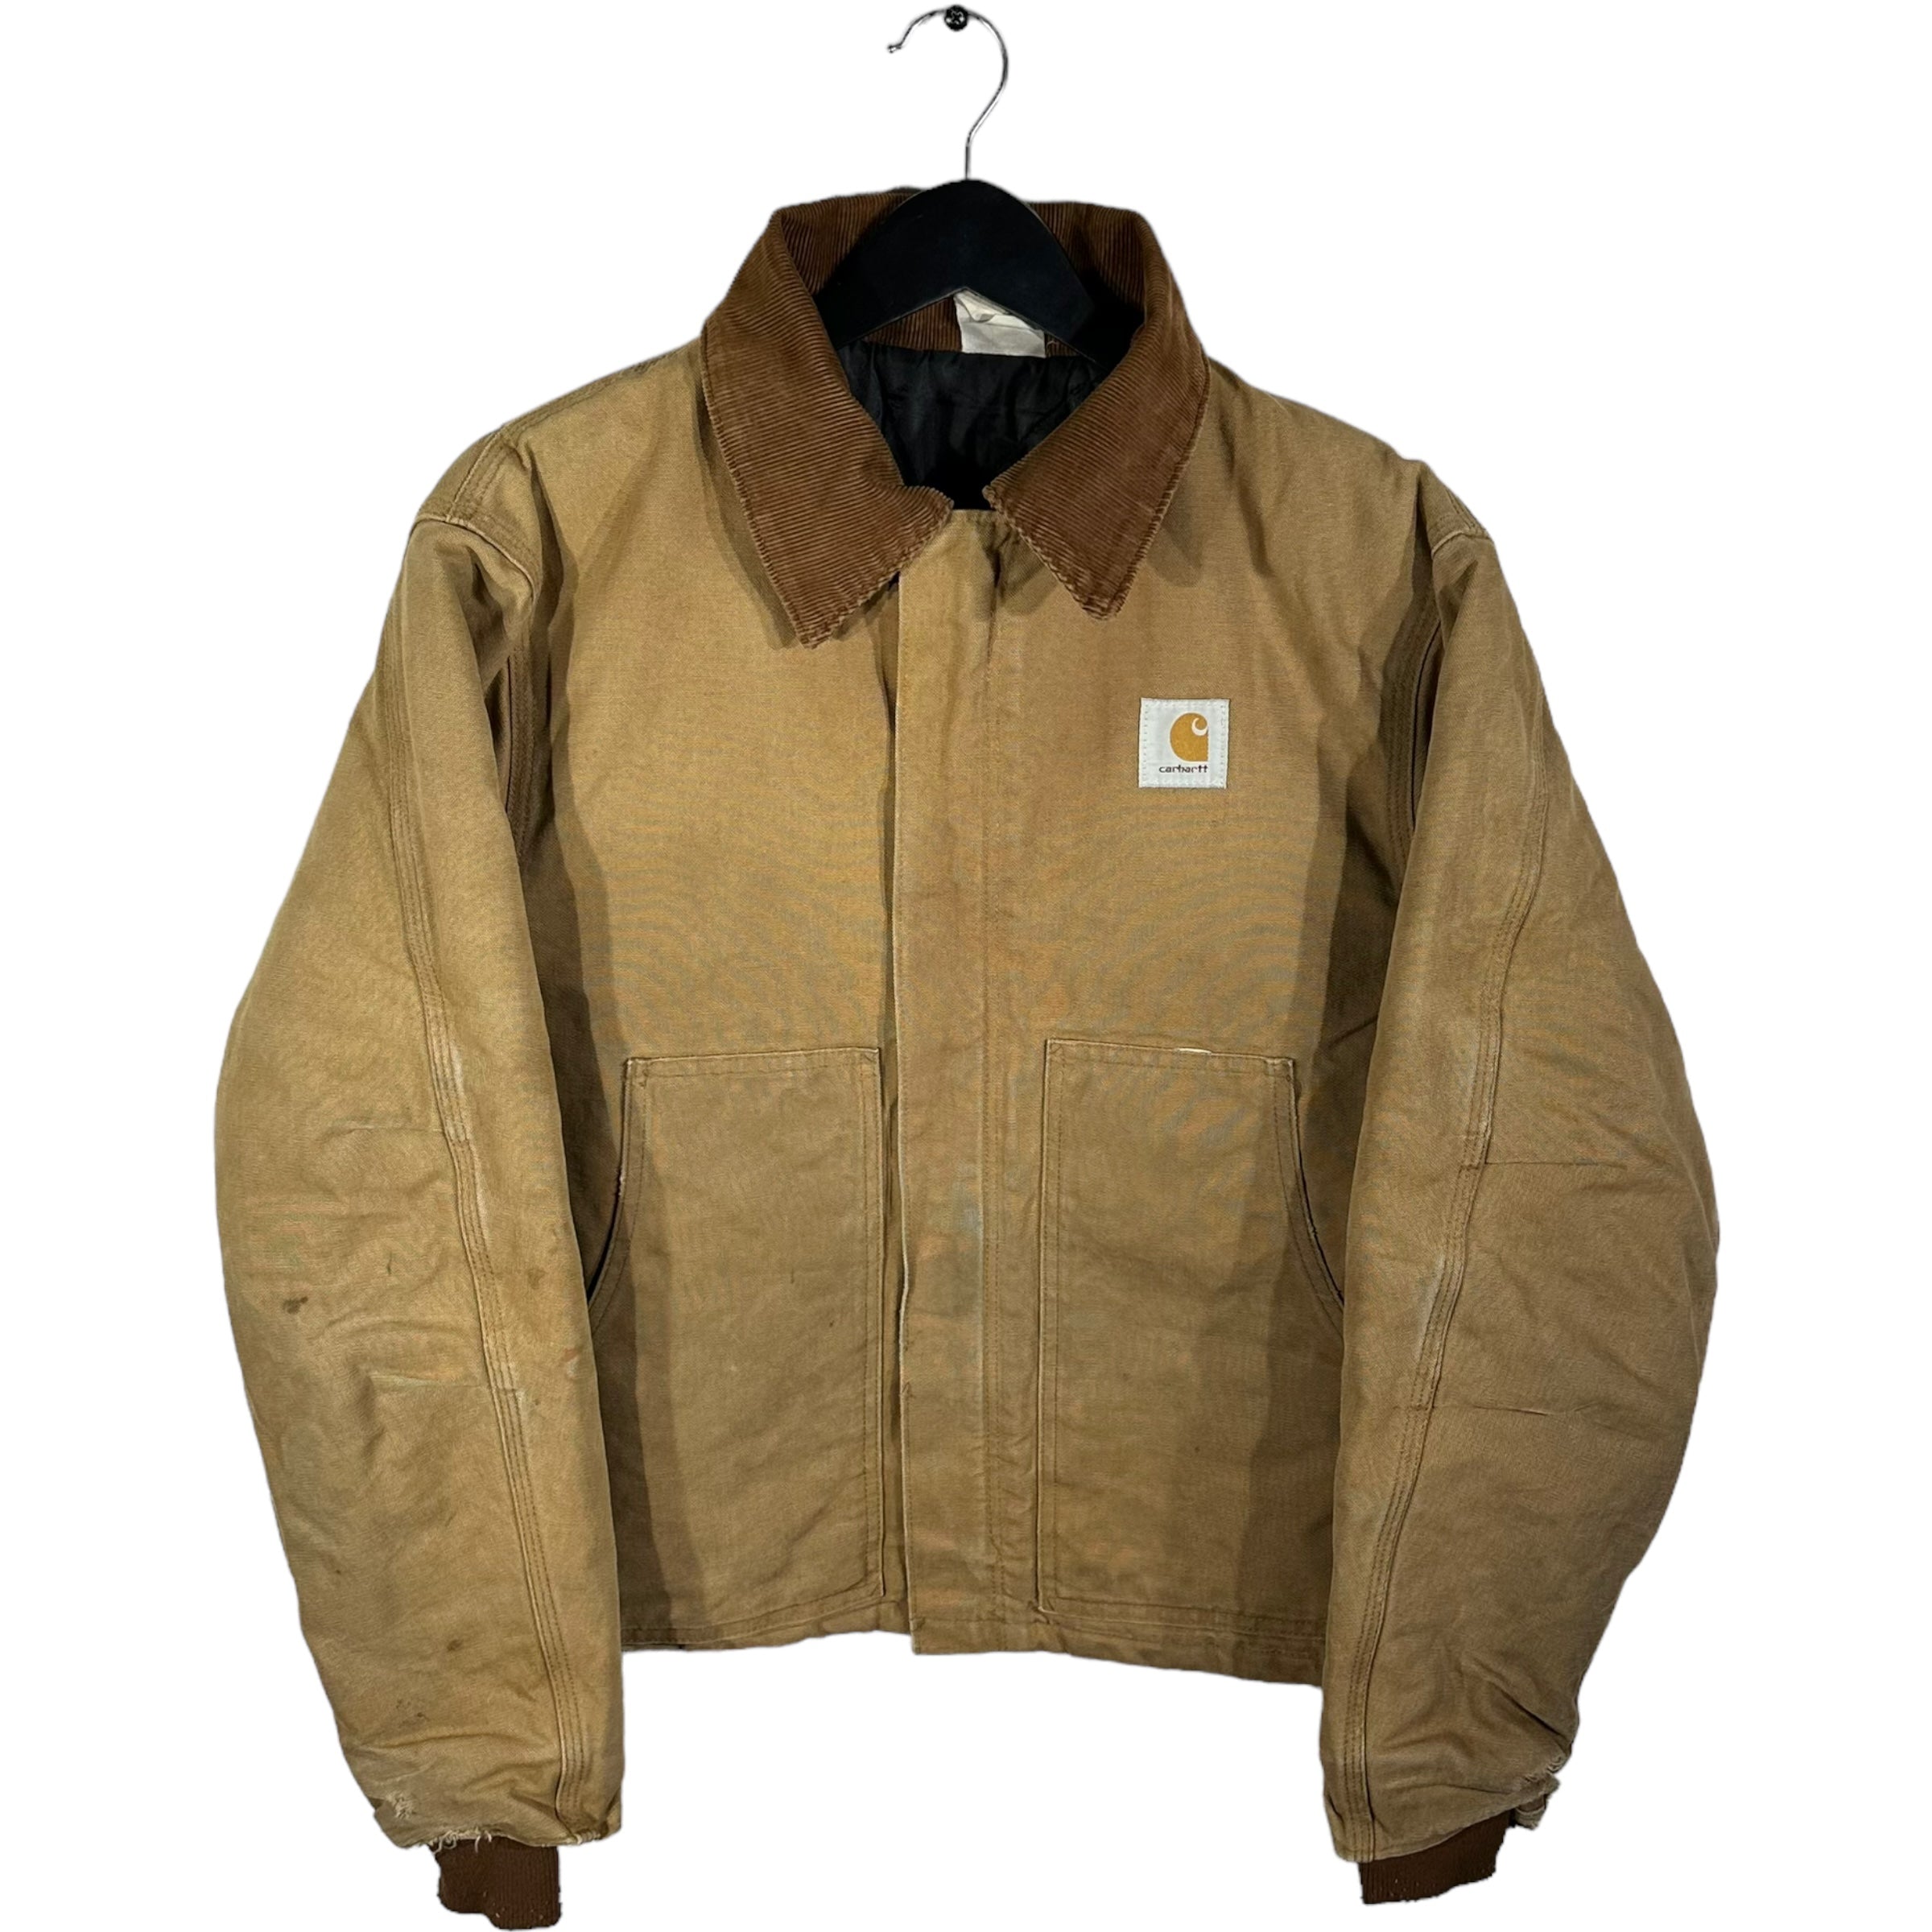 Vintage Carhartt Insulated Workwear Jacket